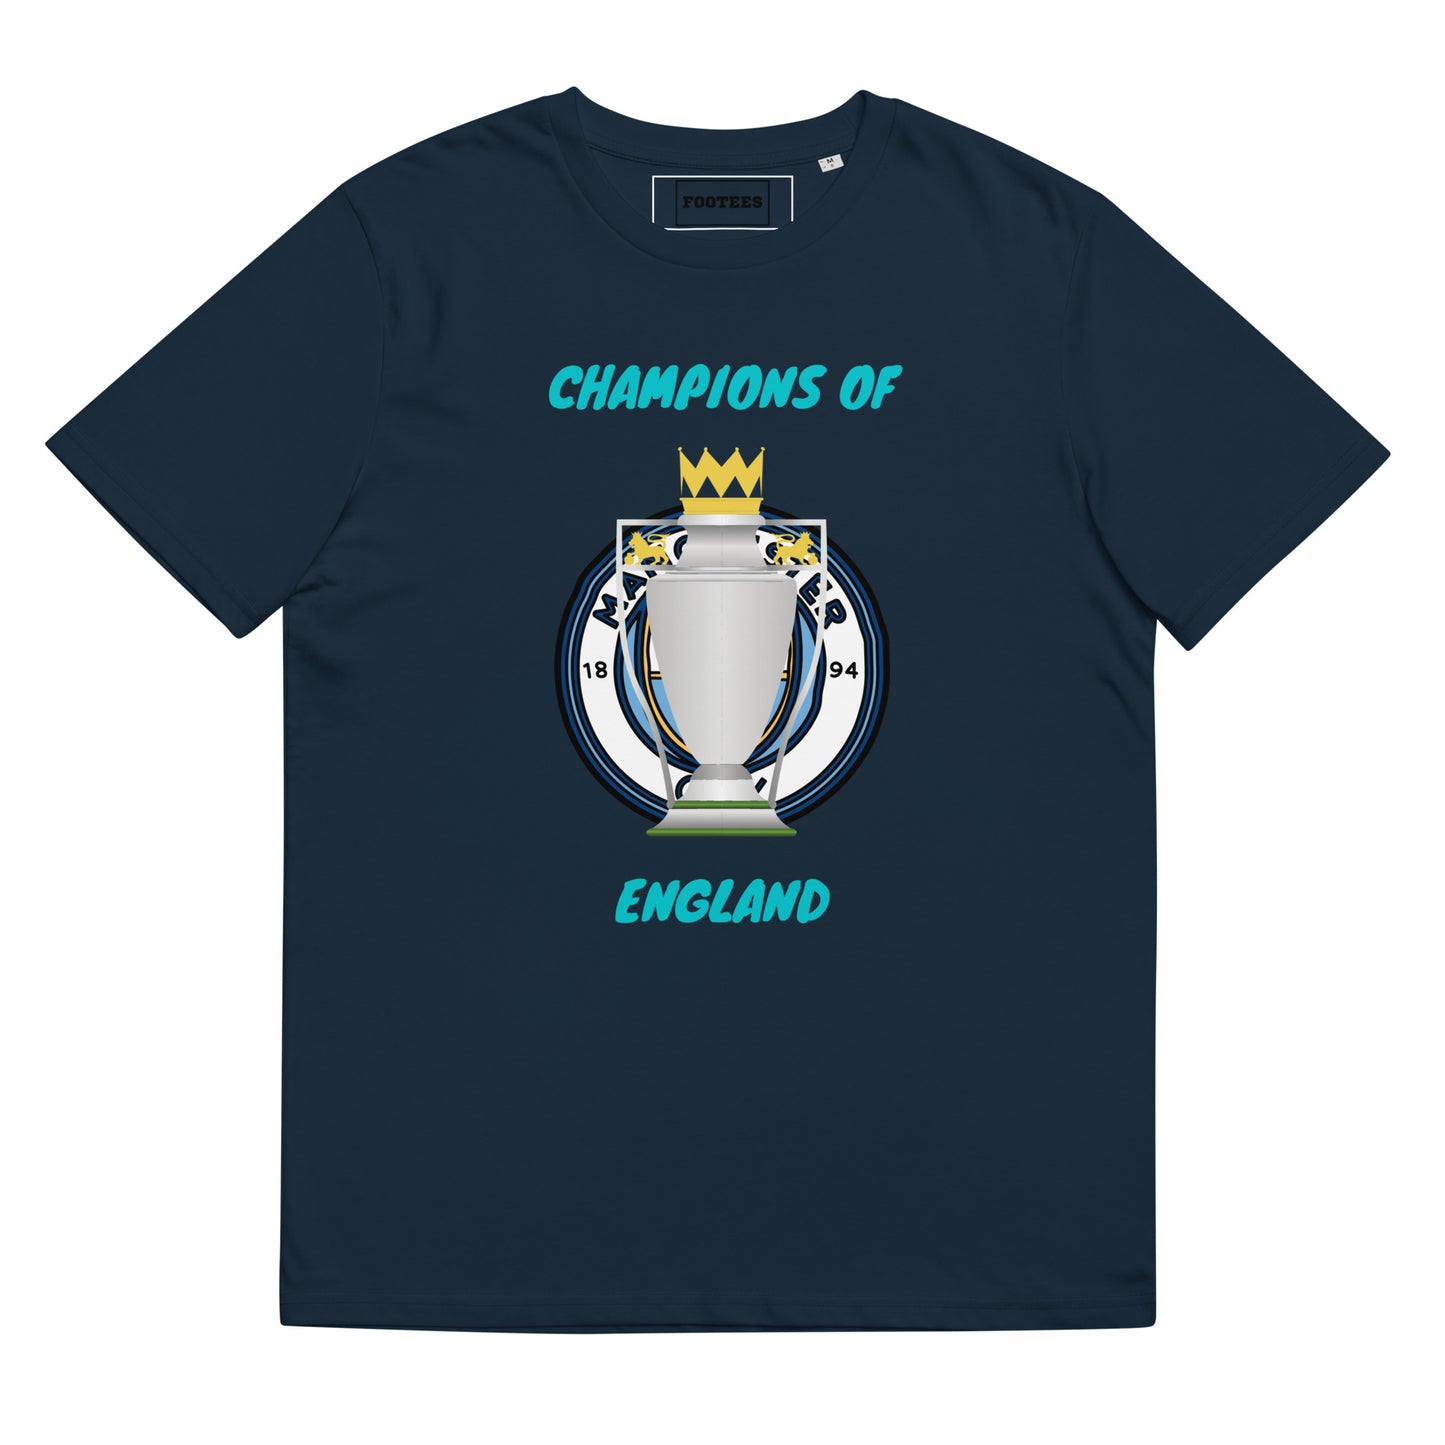 Champions of England Tee